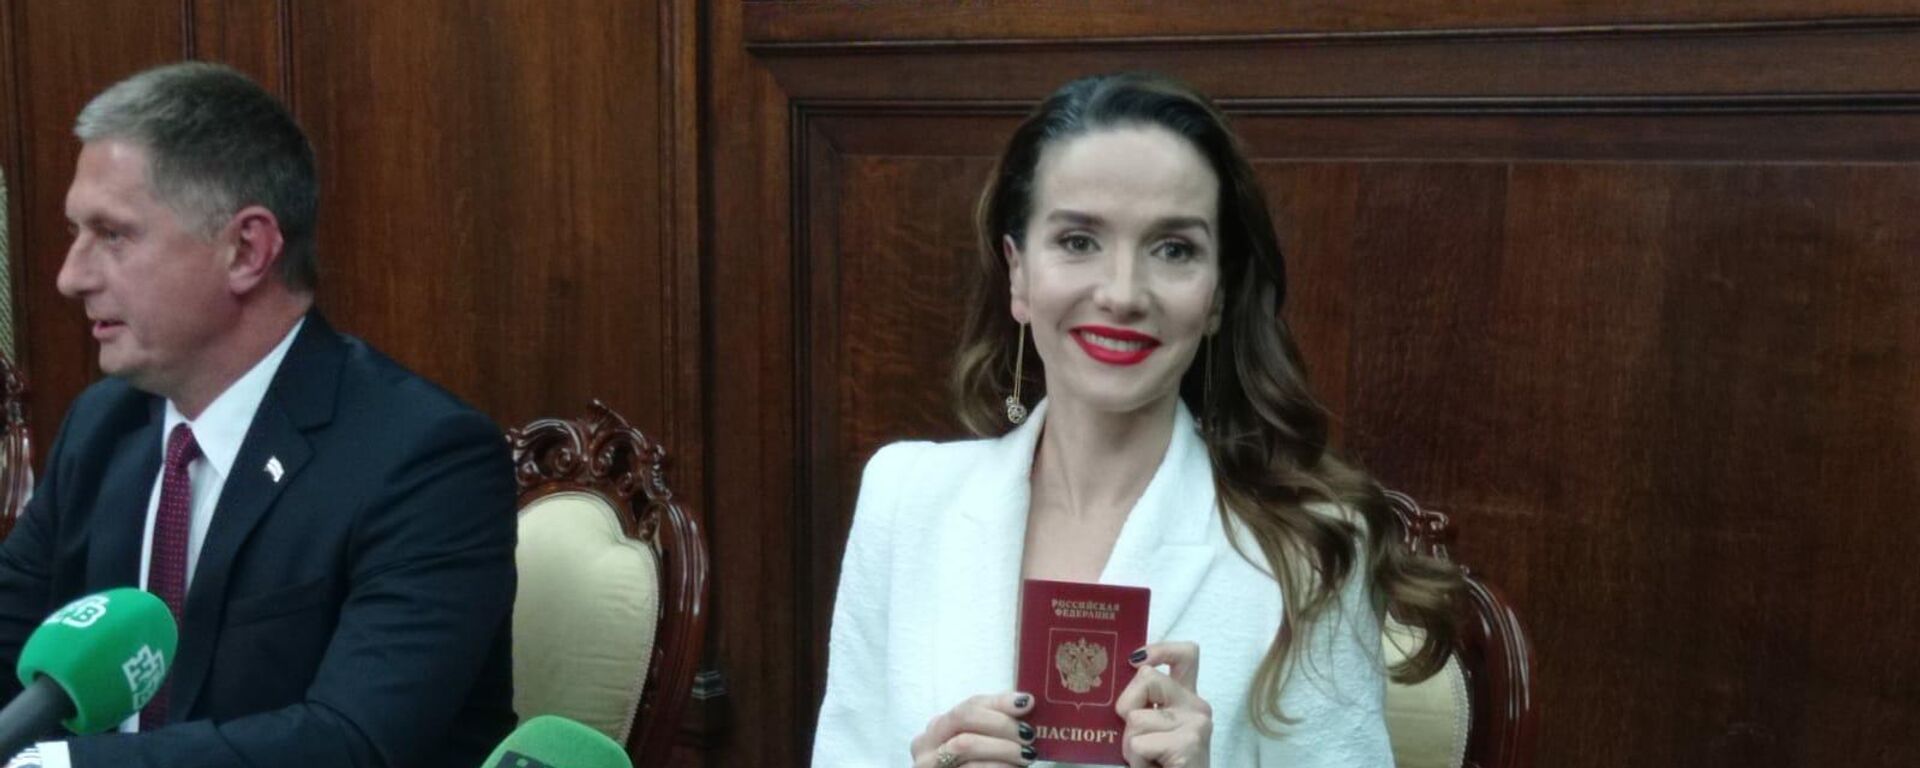 Natalia Oreiro recibe el pasaporte ruso - Sputnik Mundo, 1920, 10.11.2021